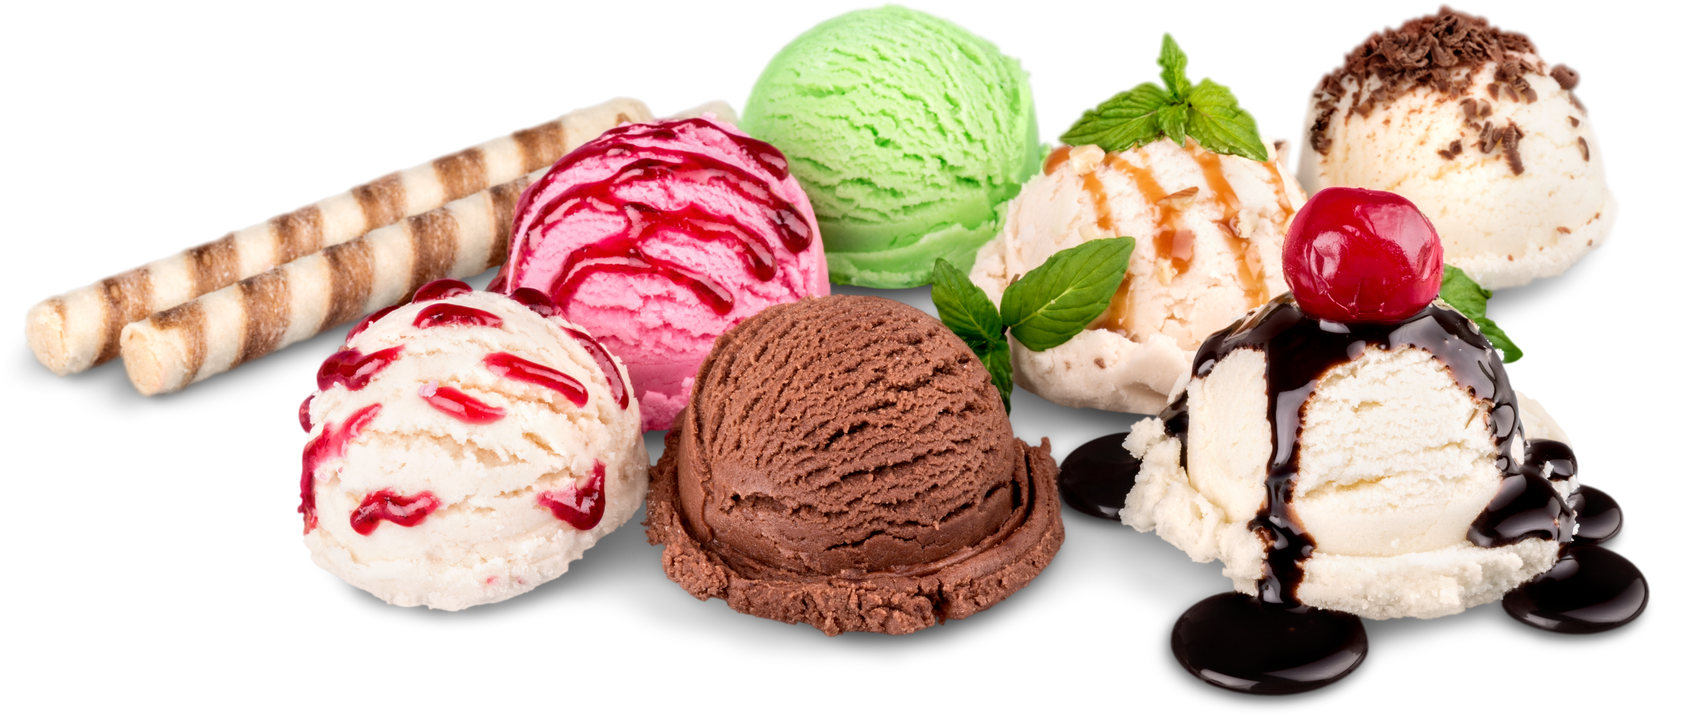 Ice Cream with Tiramisu Flavor